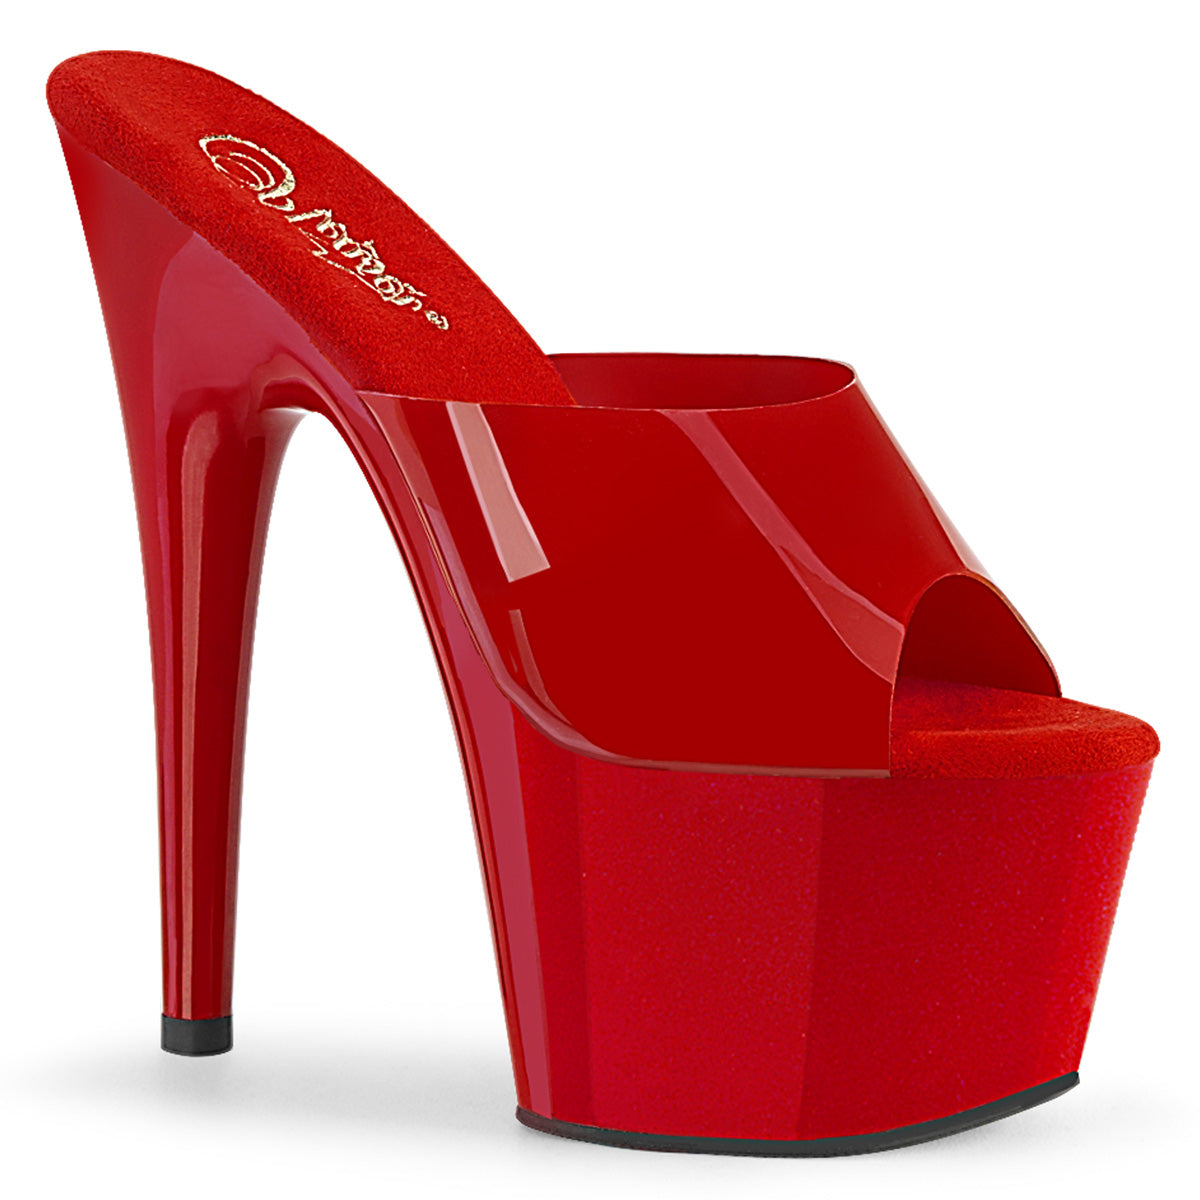 Pleaser Sandales pour femmes ADORE-701n rouge rouge (gelée) TPU / rouge